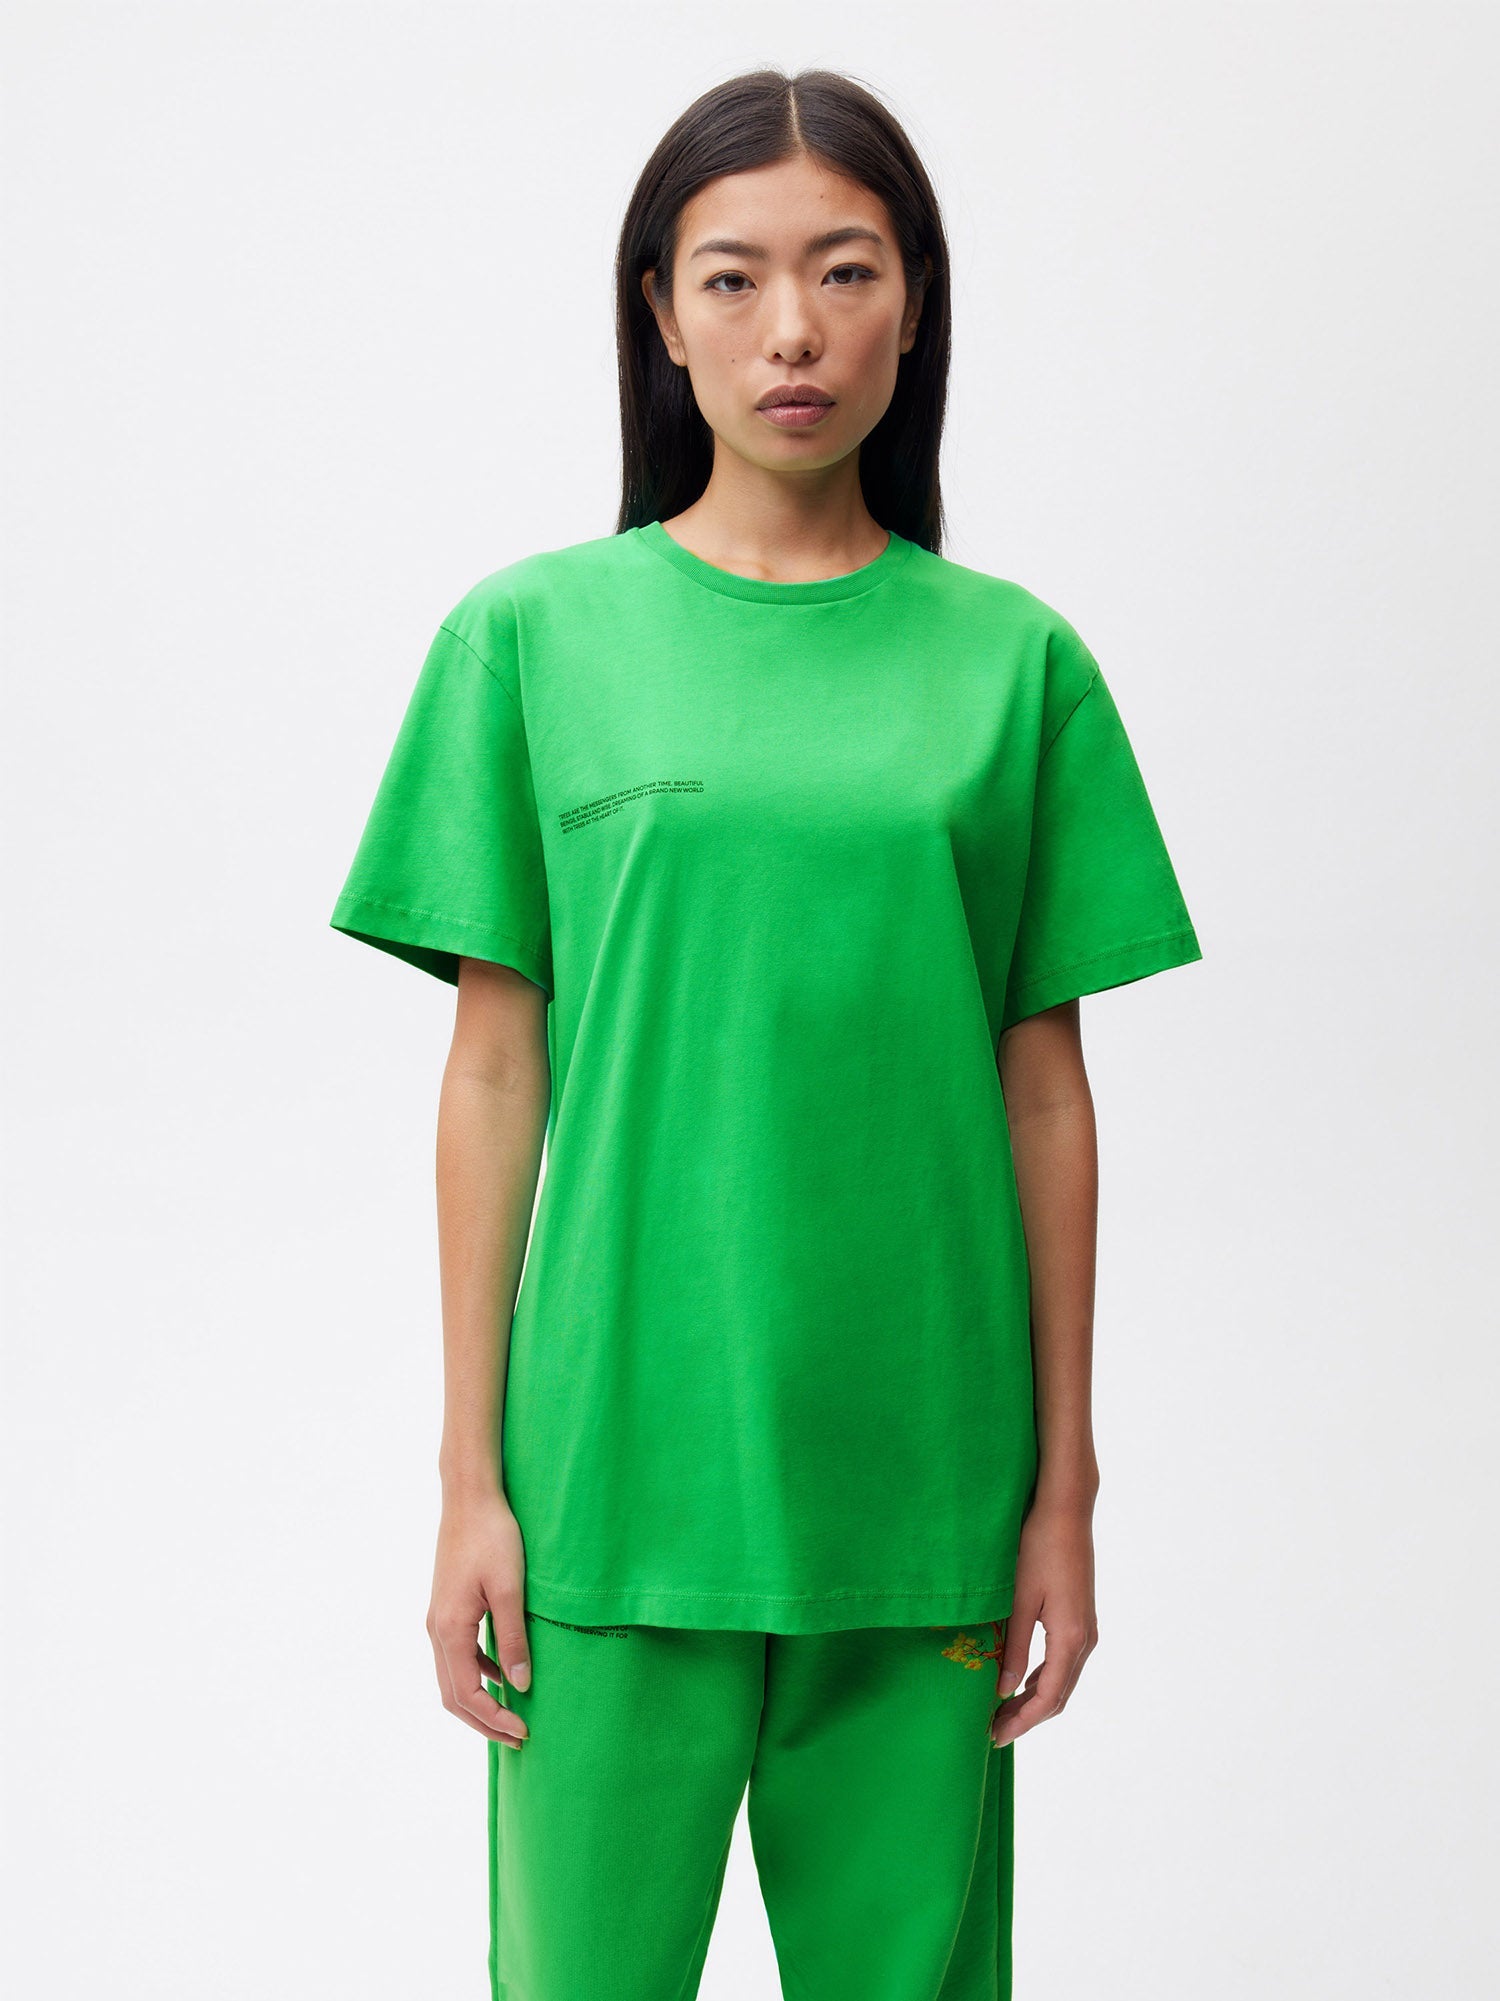 Pangaia-Kenny-Scharf-Organic-Cotton-T-Shirt-Paradis-Perdu-Jade-Green-Female-1